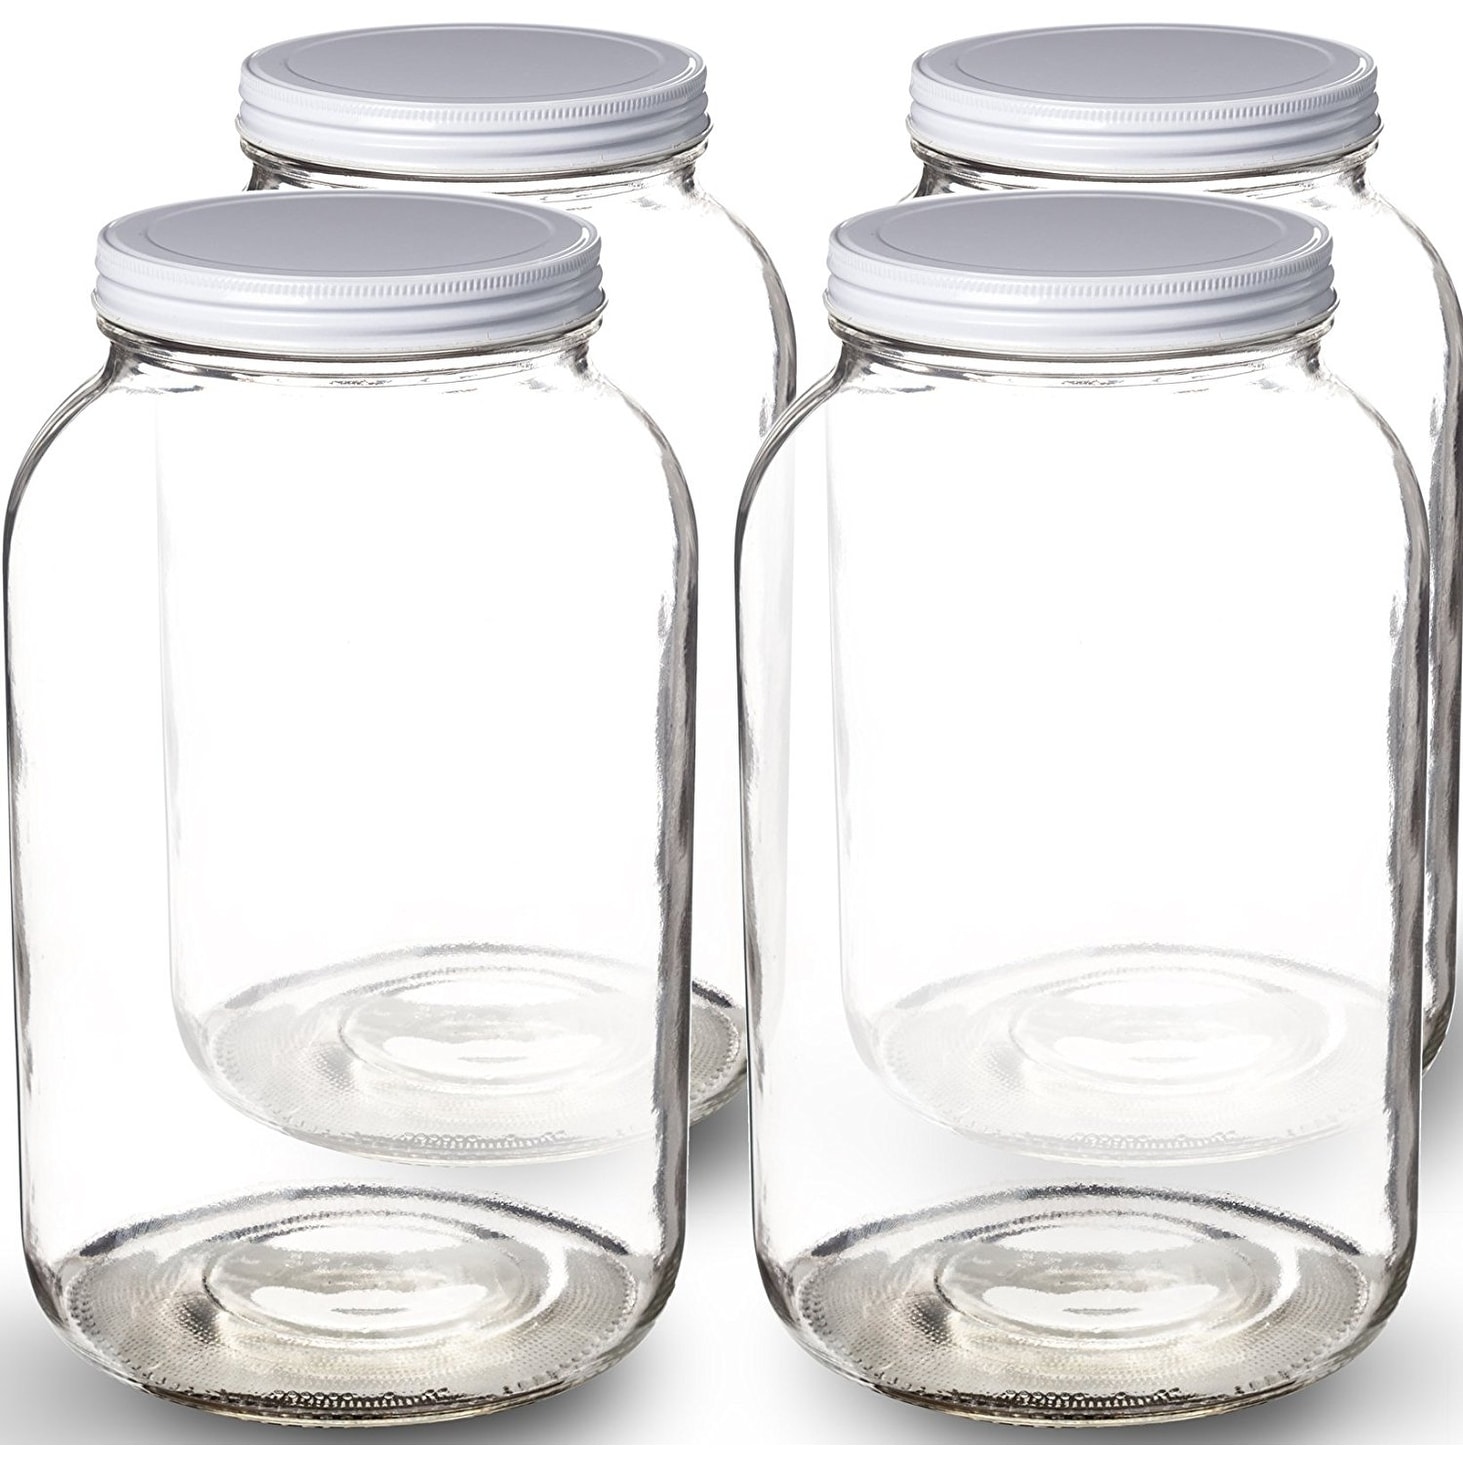 airtight jars with lids